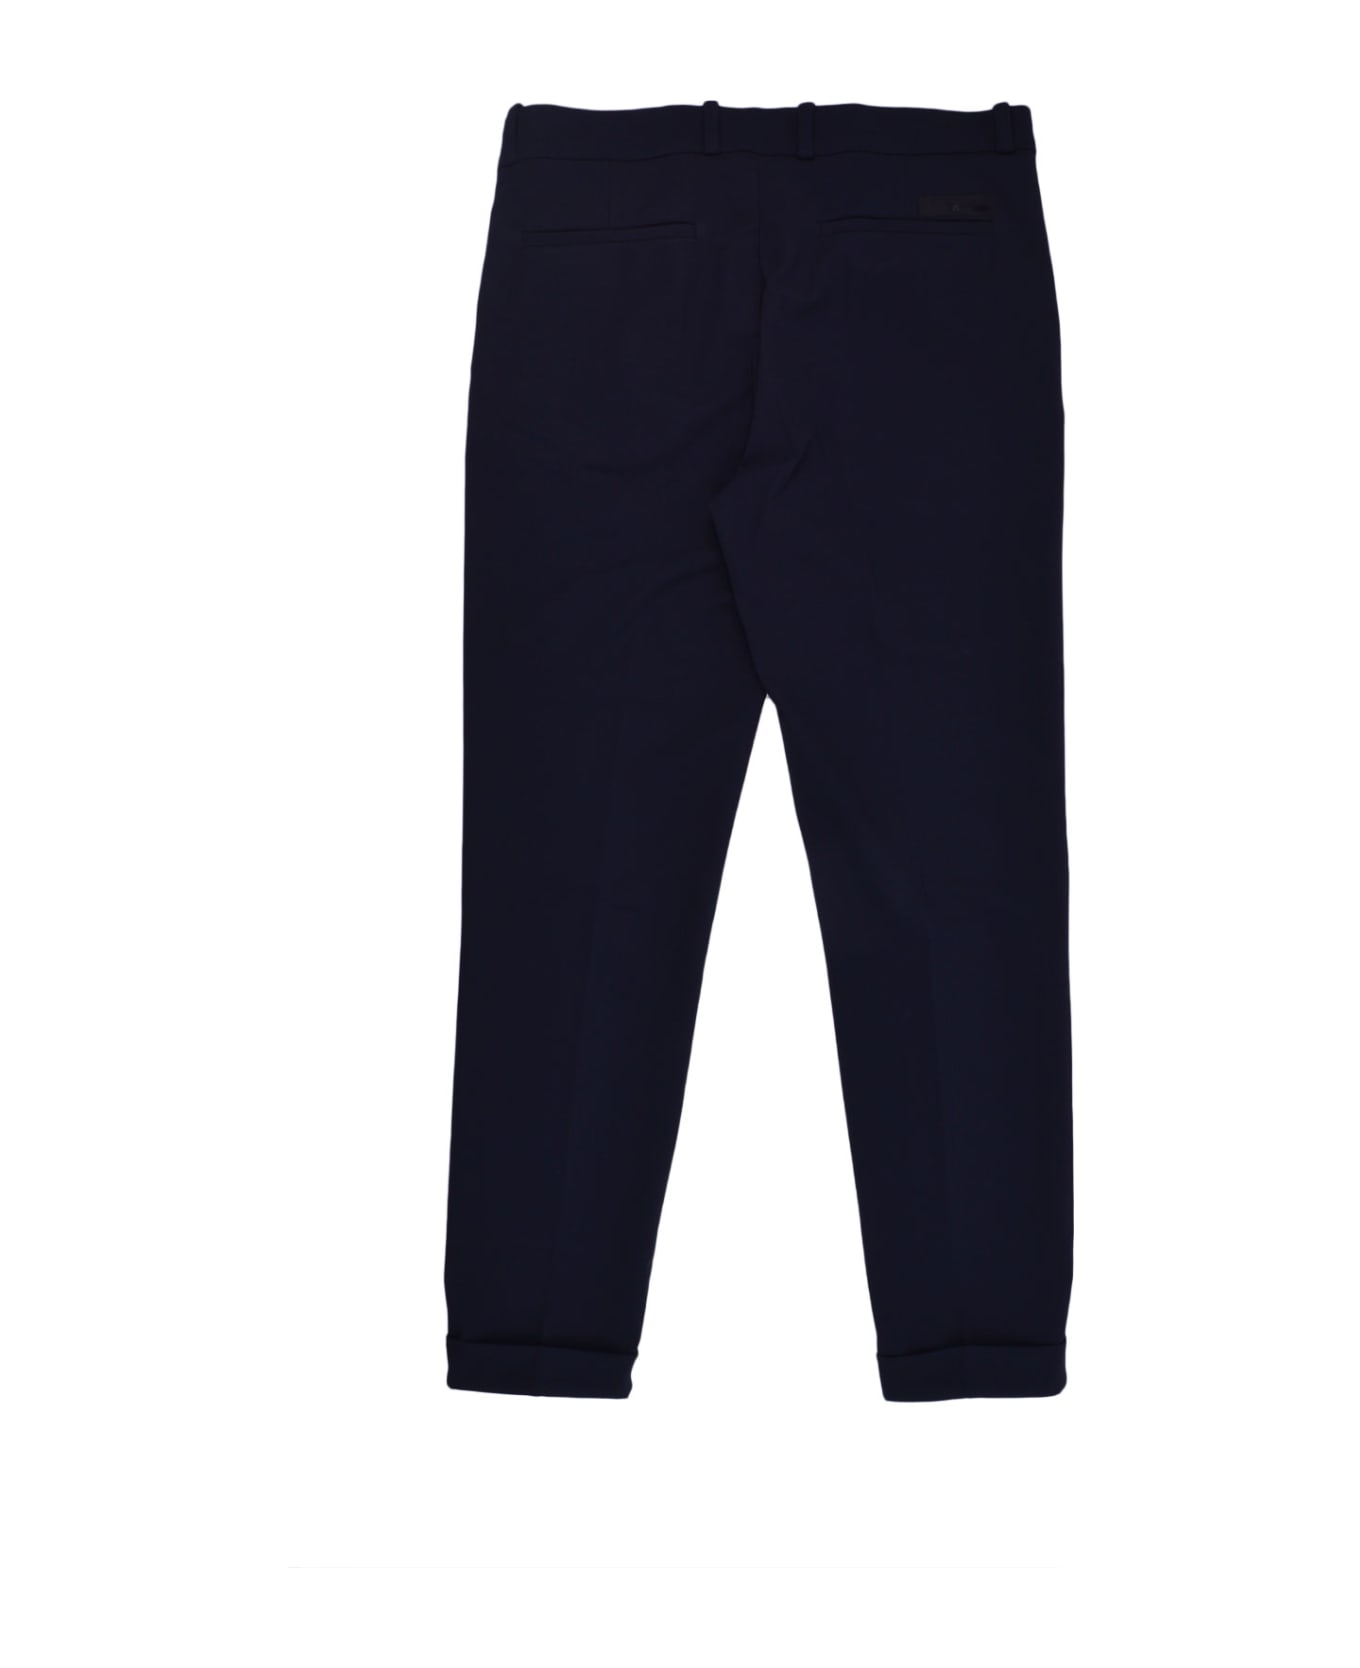 RRD - Roberto Ricci Design Pants Pants - BLUE BLACK スウェットパンツ